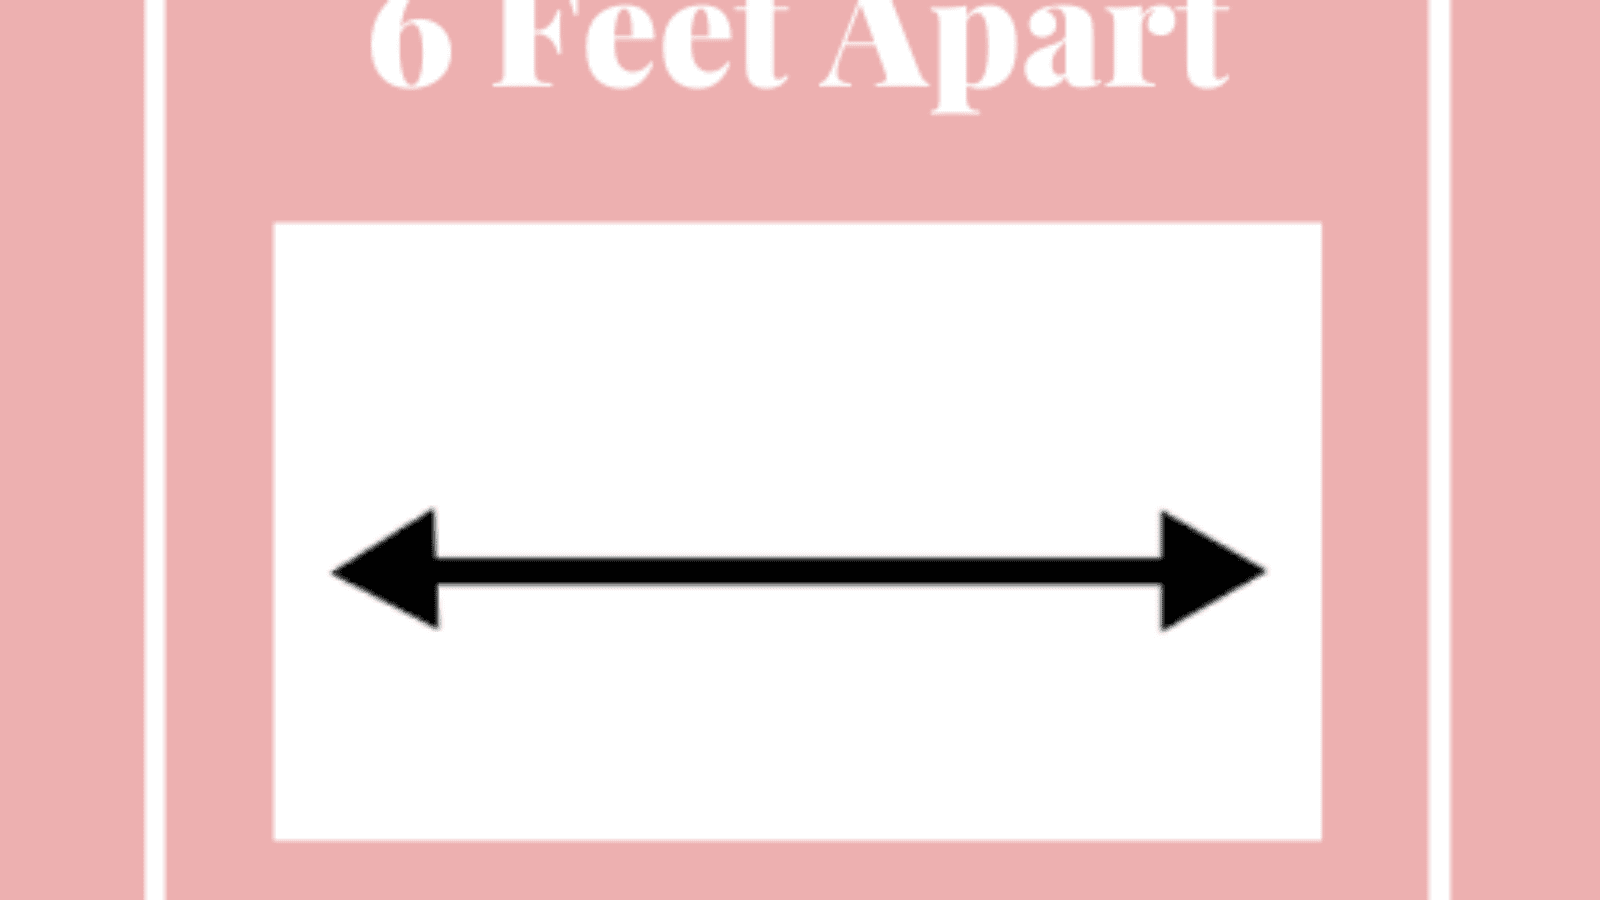 Armitage-6-Feet-Apart-w-logo-1